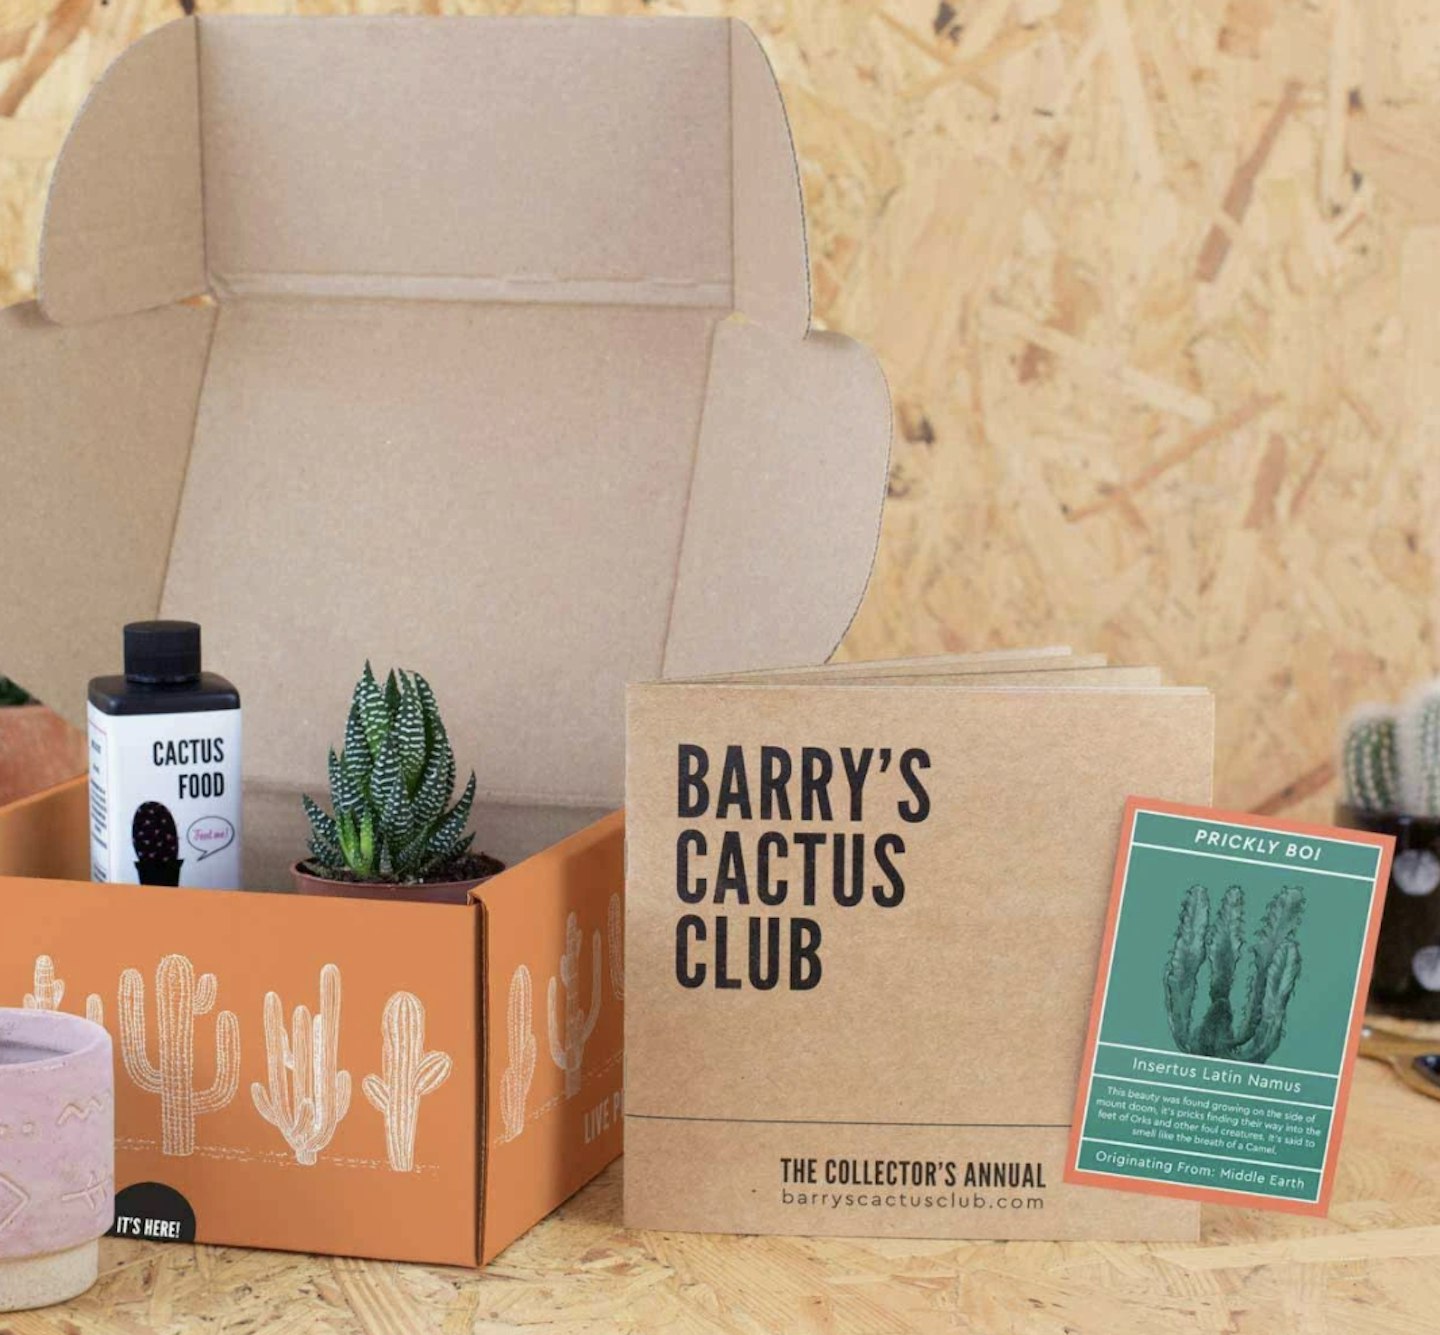 Barry's Cactus Club